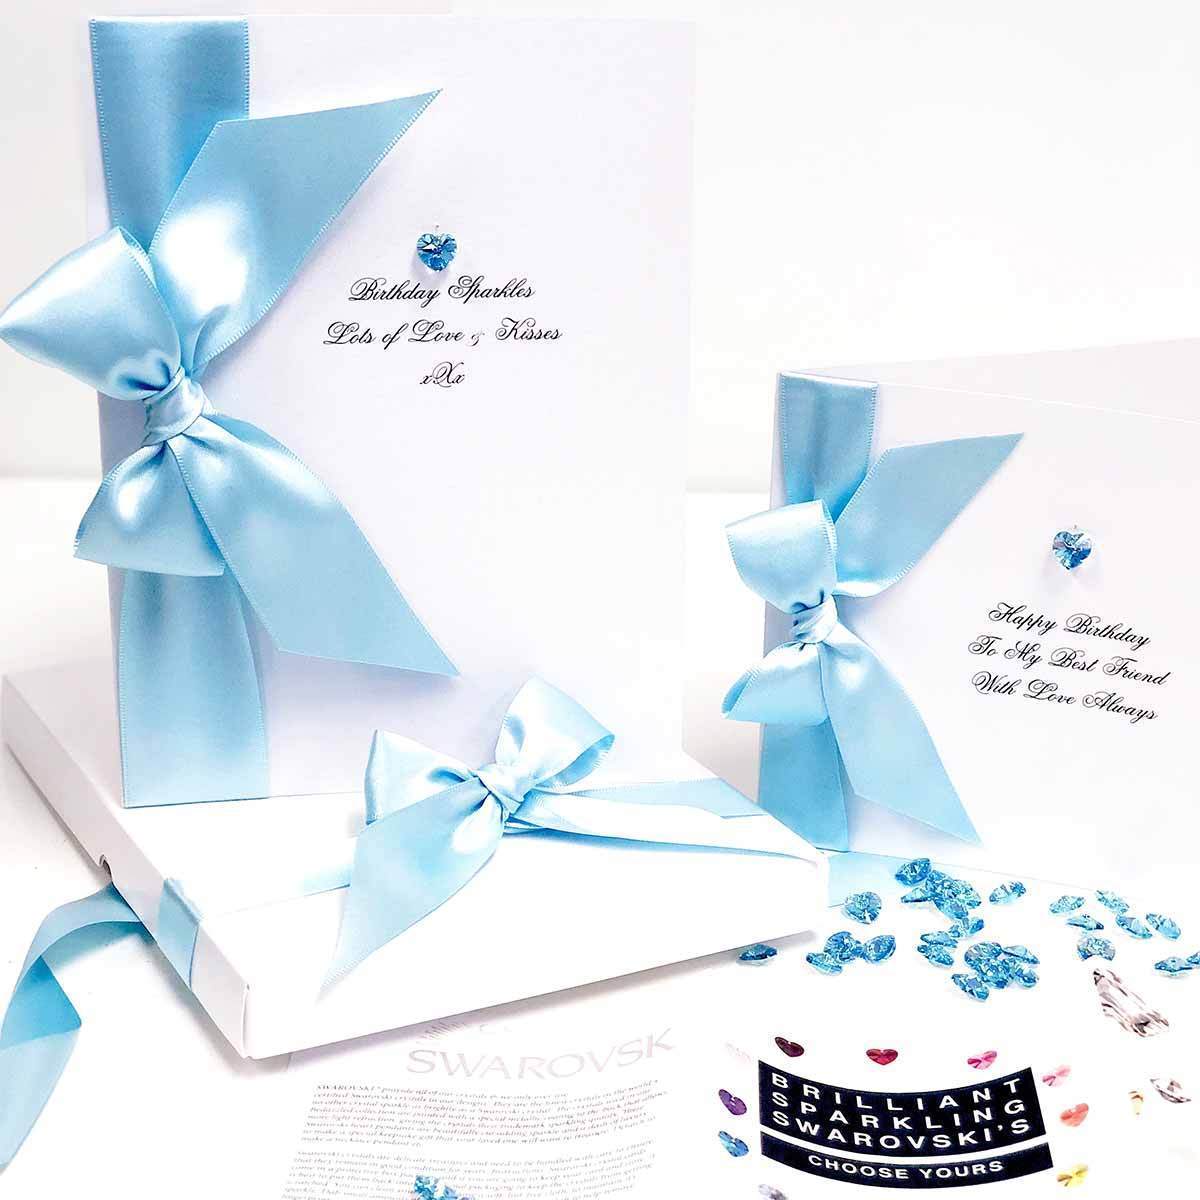 Aquamarine birthstone birthday card | The Luxe Co